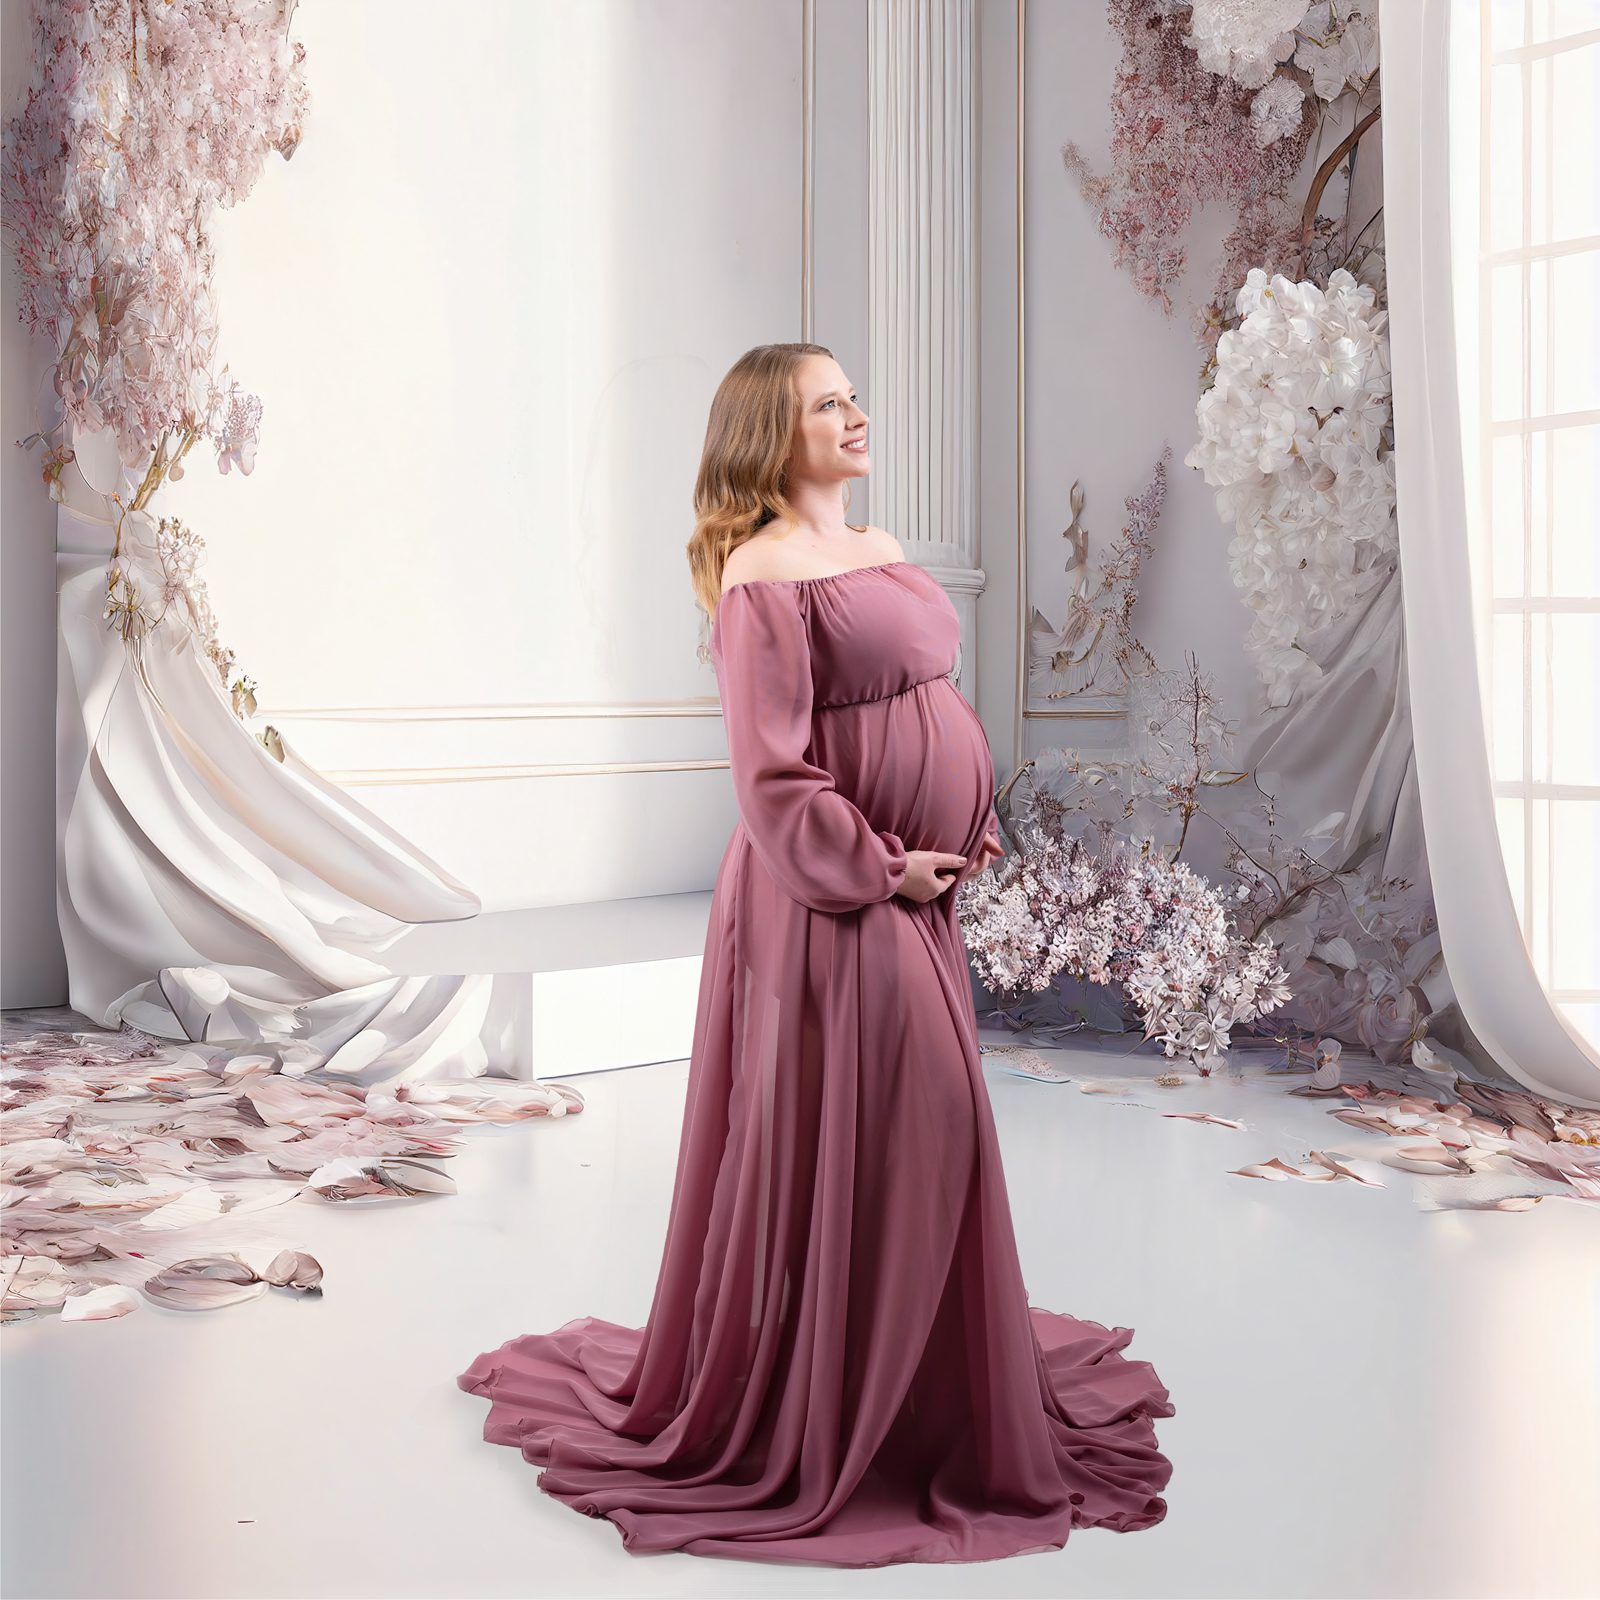 maternity photography - digital backdrop composite